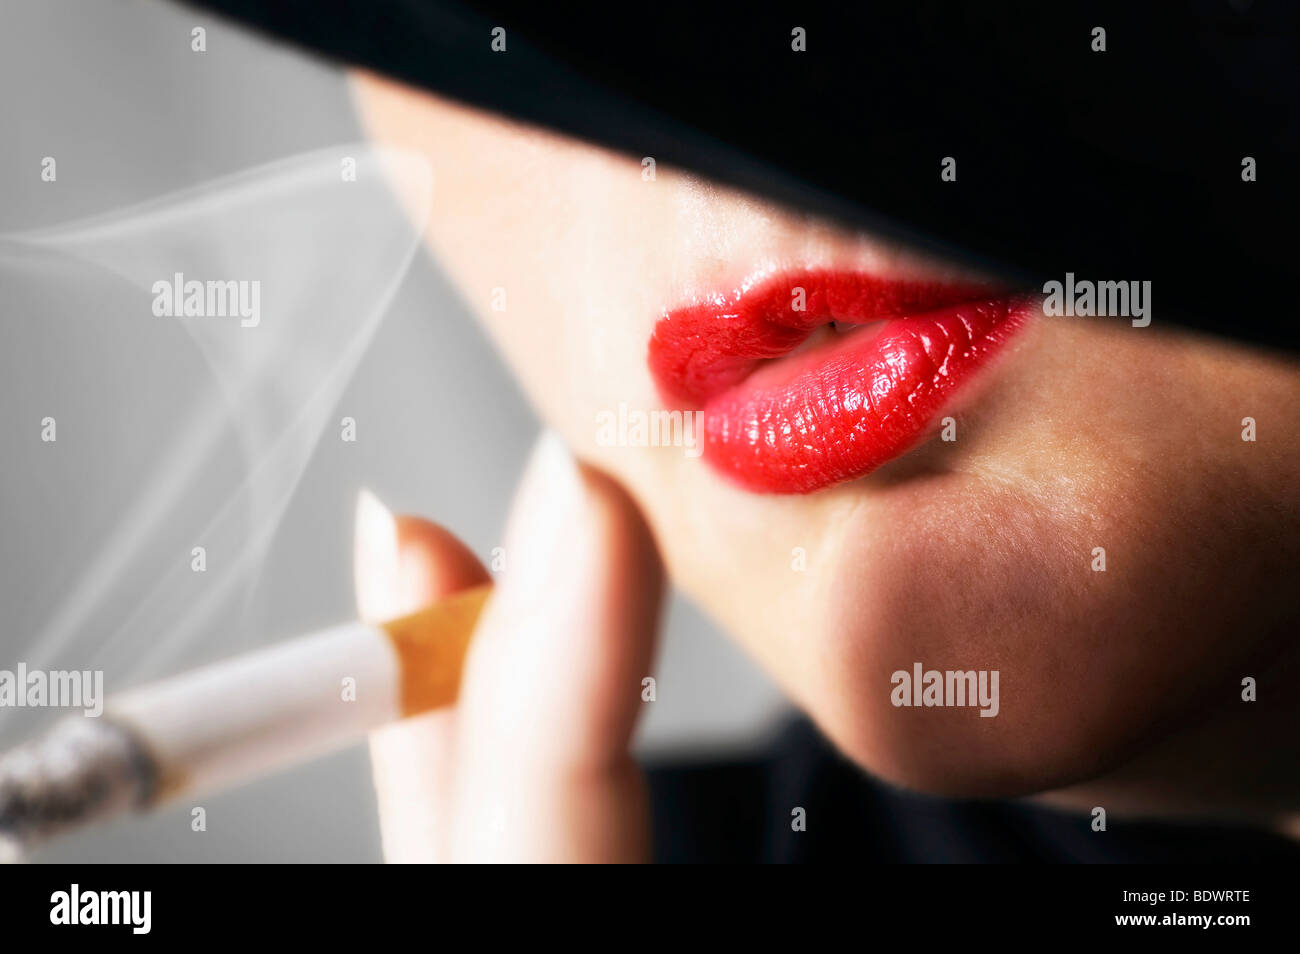 Woman lipstick smoking hi-res stock photography and images - Alamy